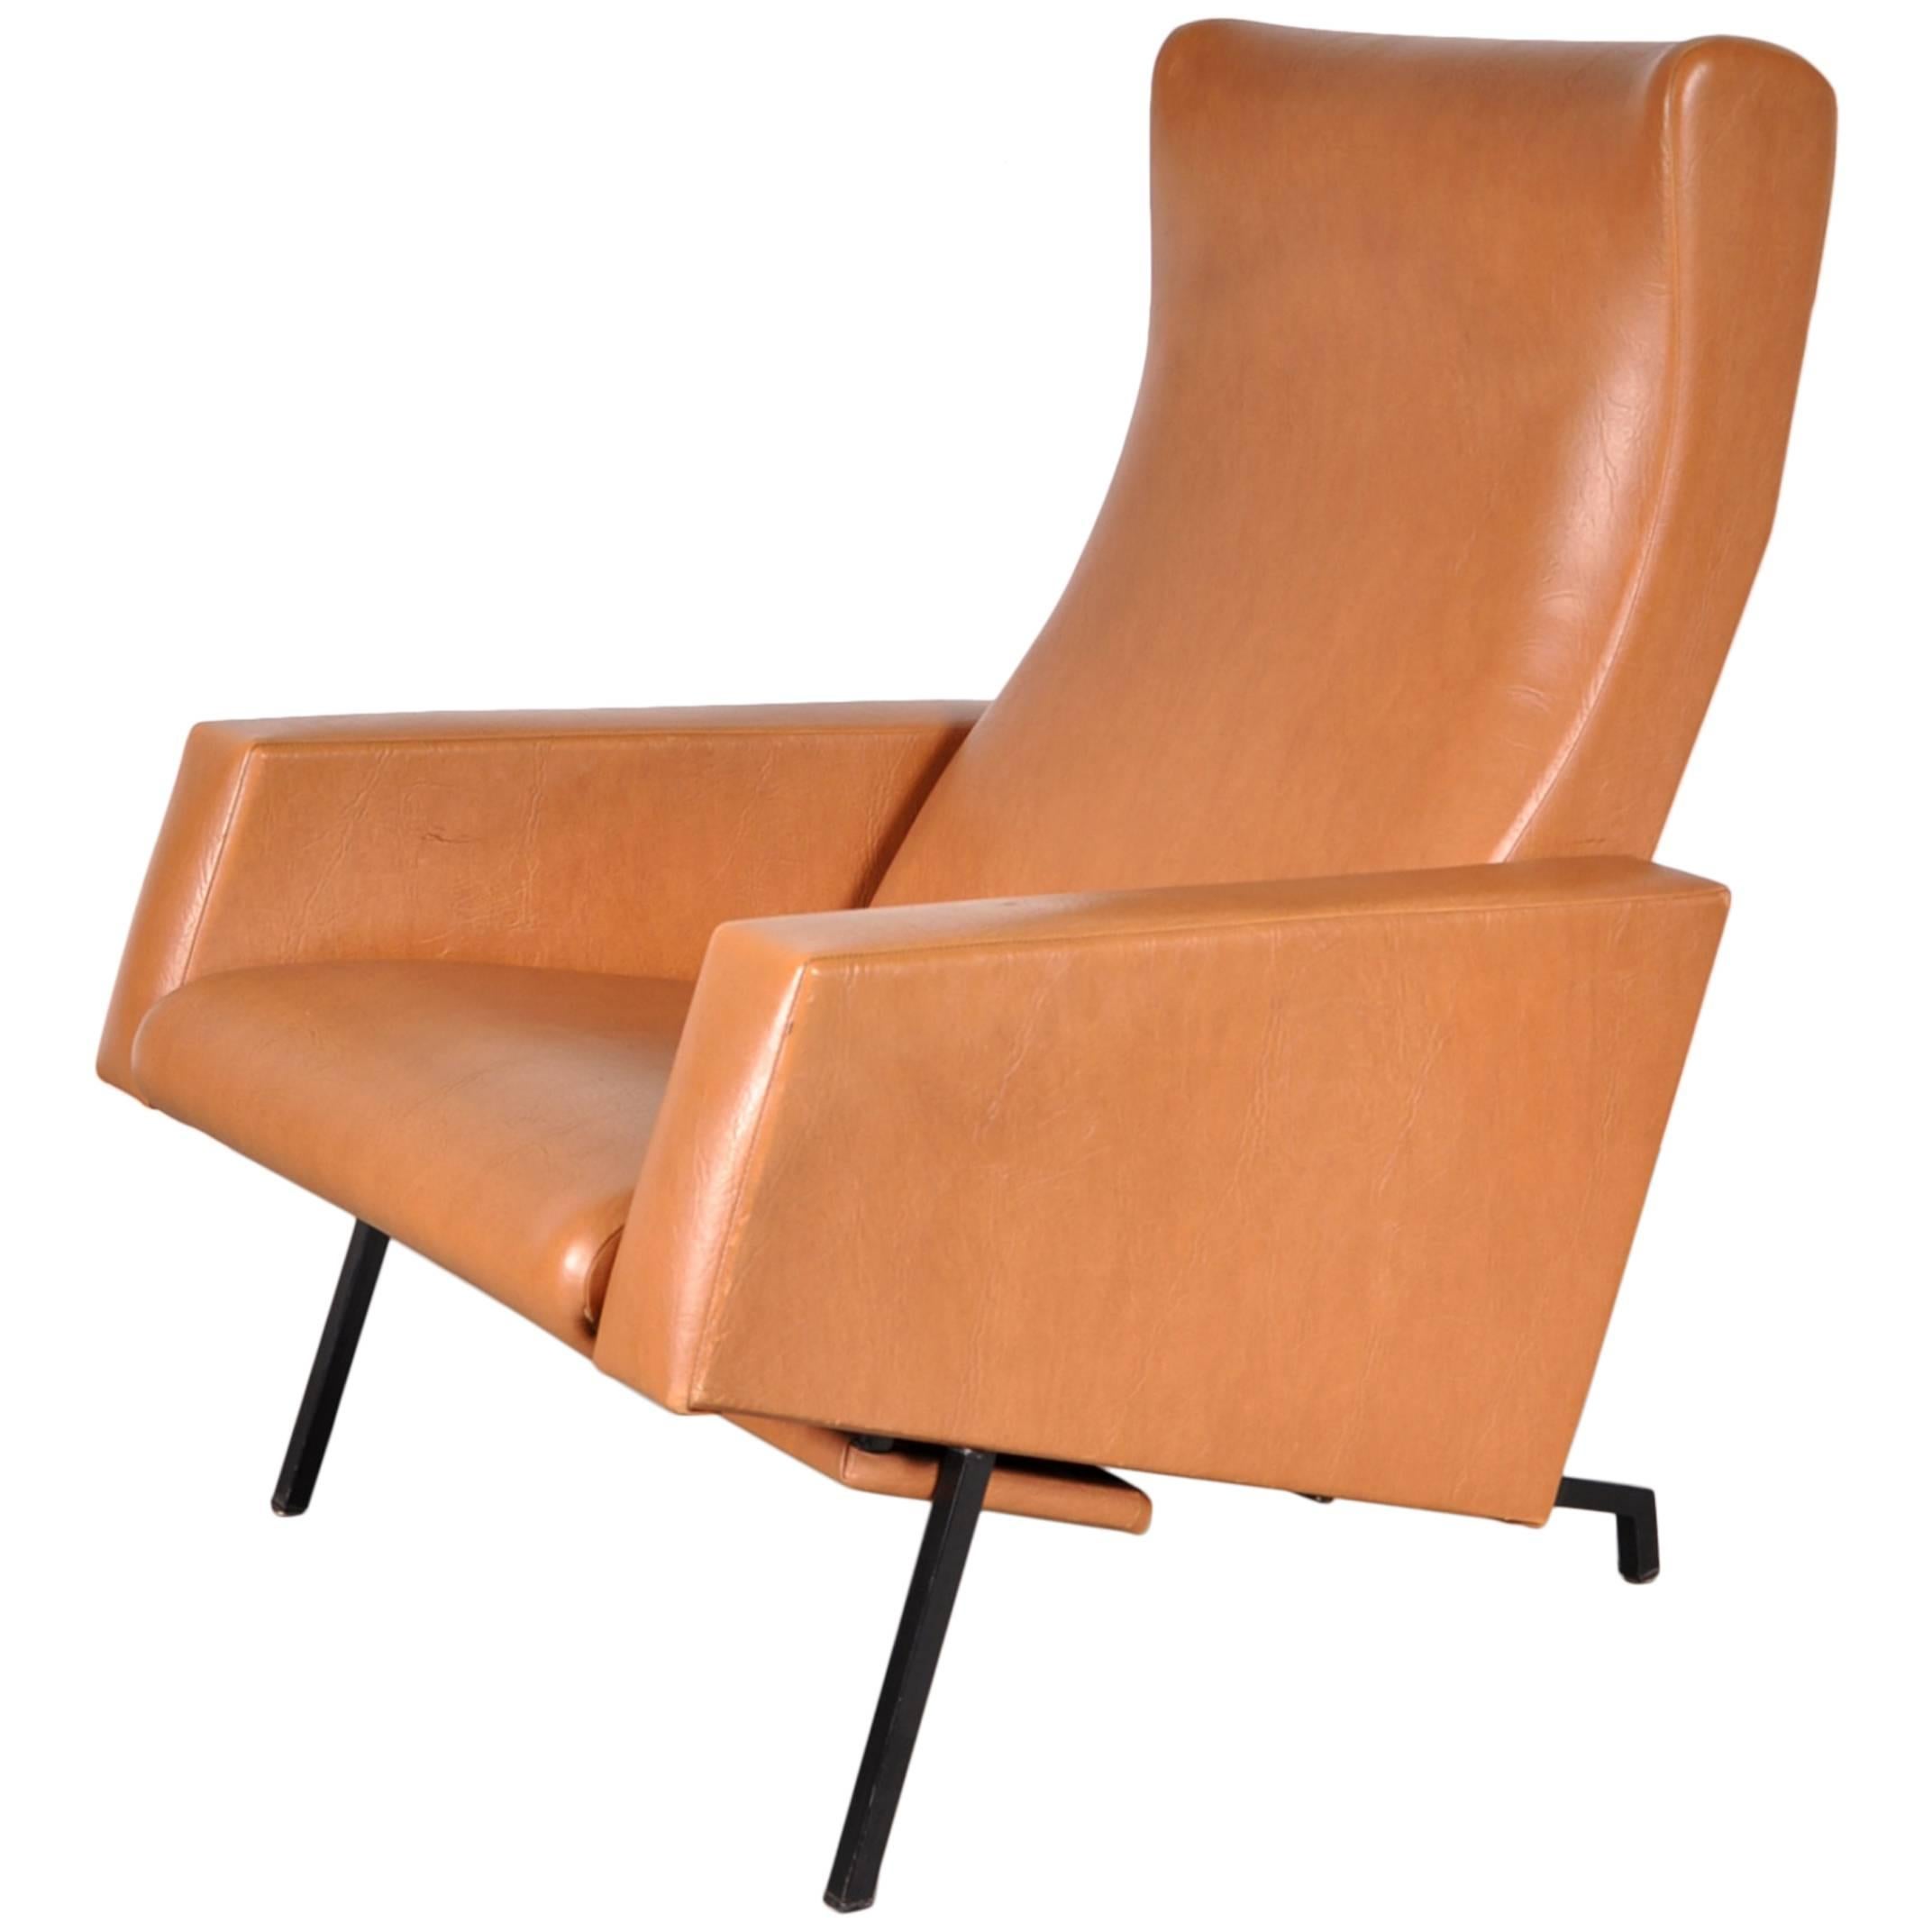 Trelax Chair by Pierre Guariche, Manufactured by Meurop, Belgium, circa 1950